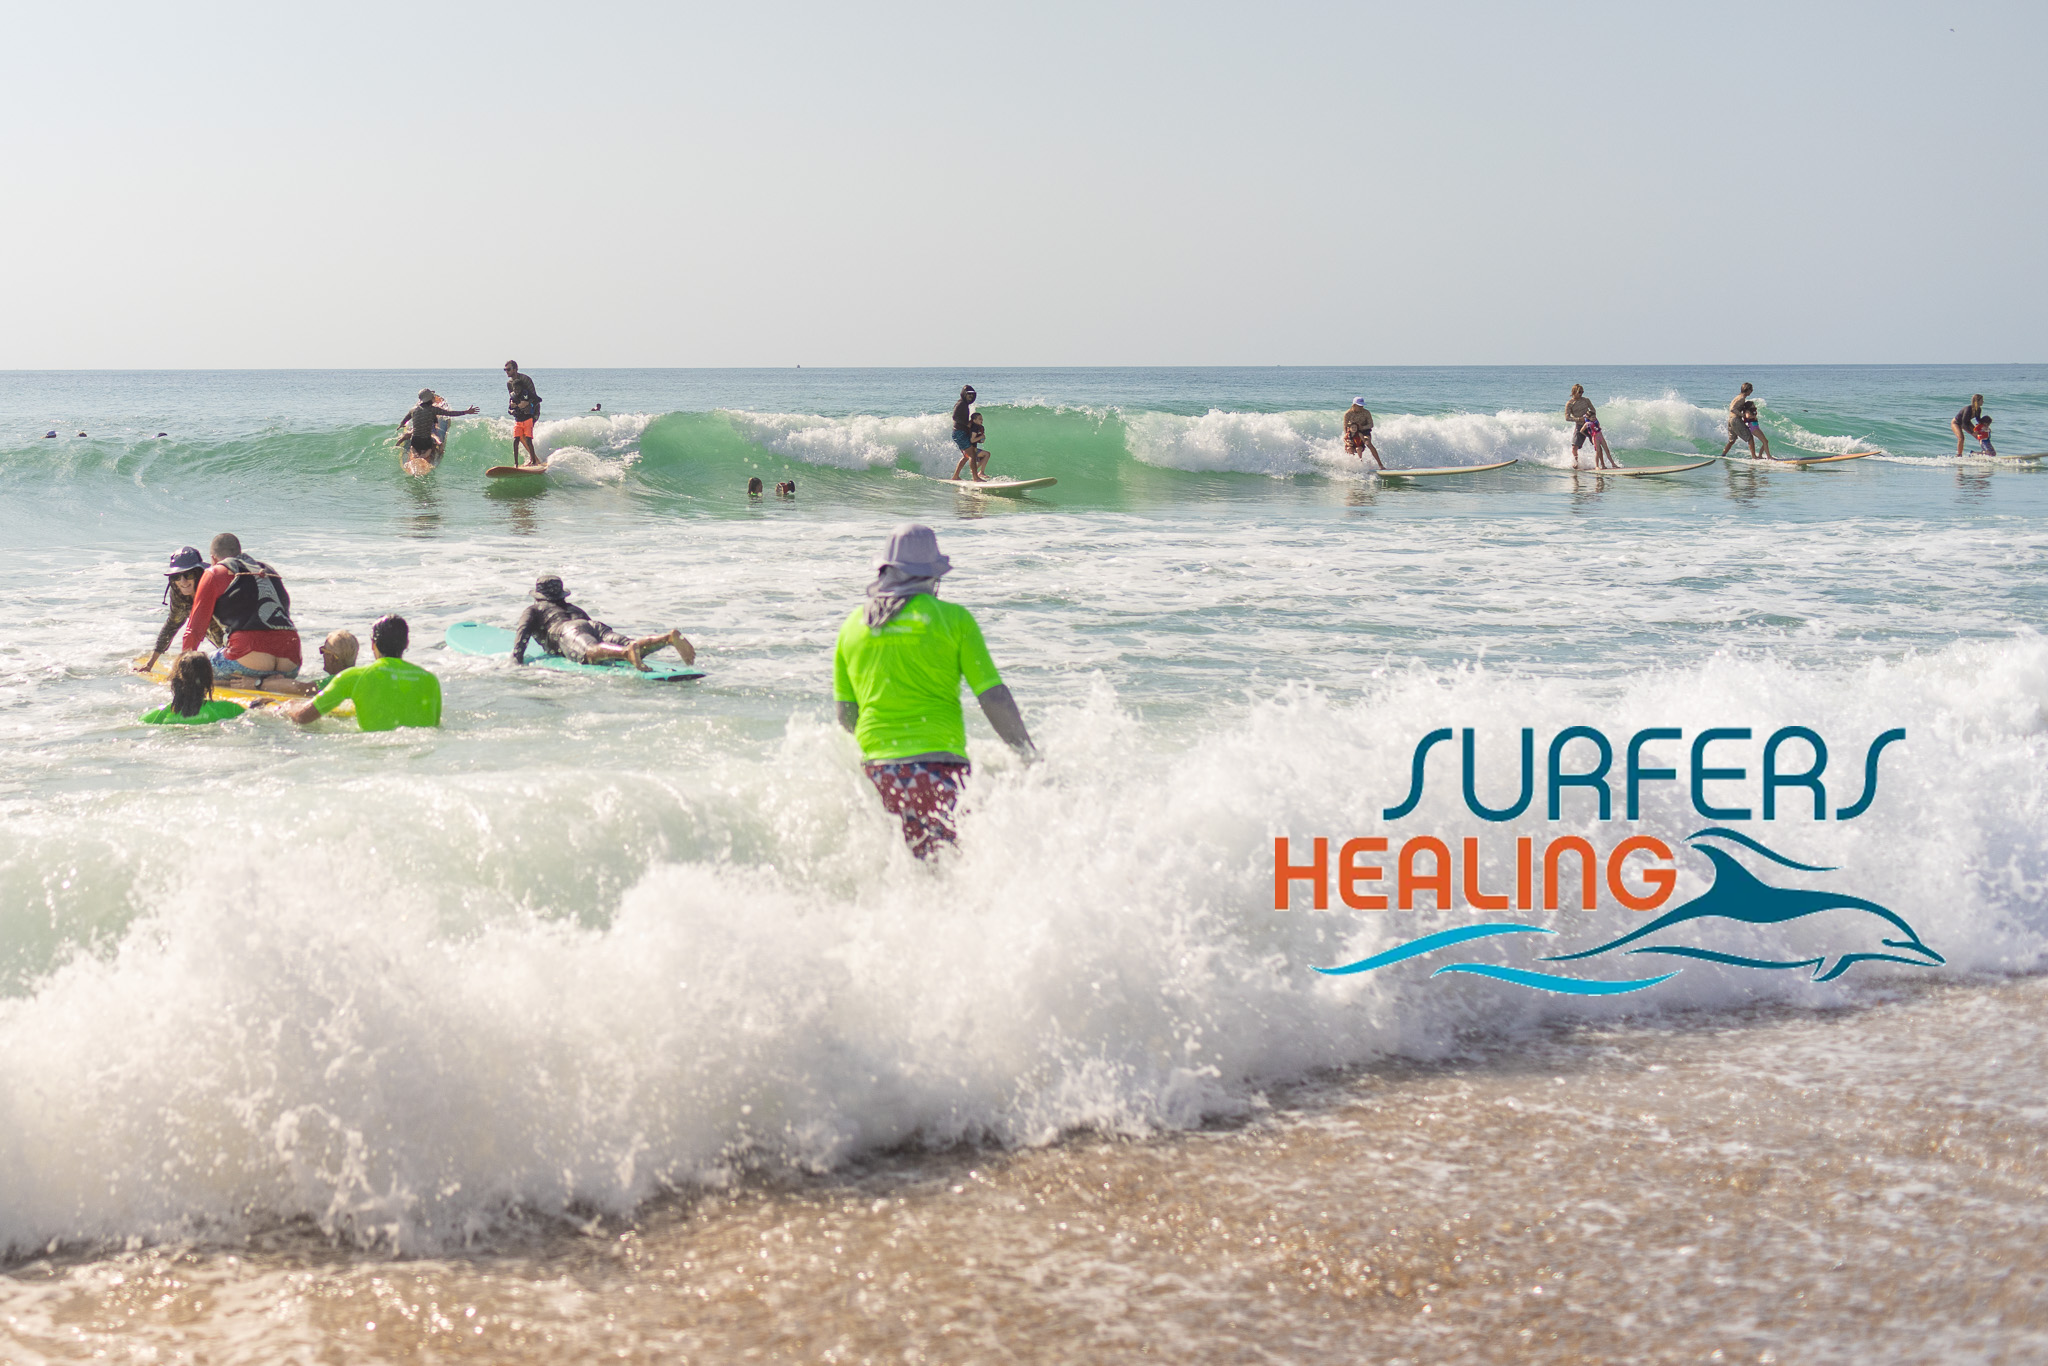 Surfers Healing Wrightsville Beach autism surf camp